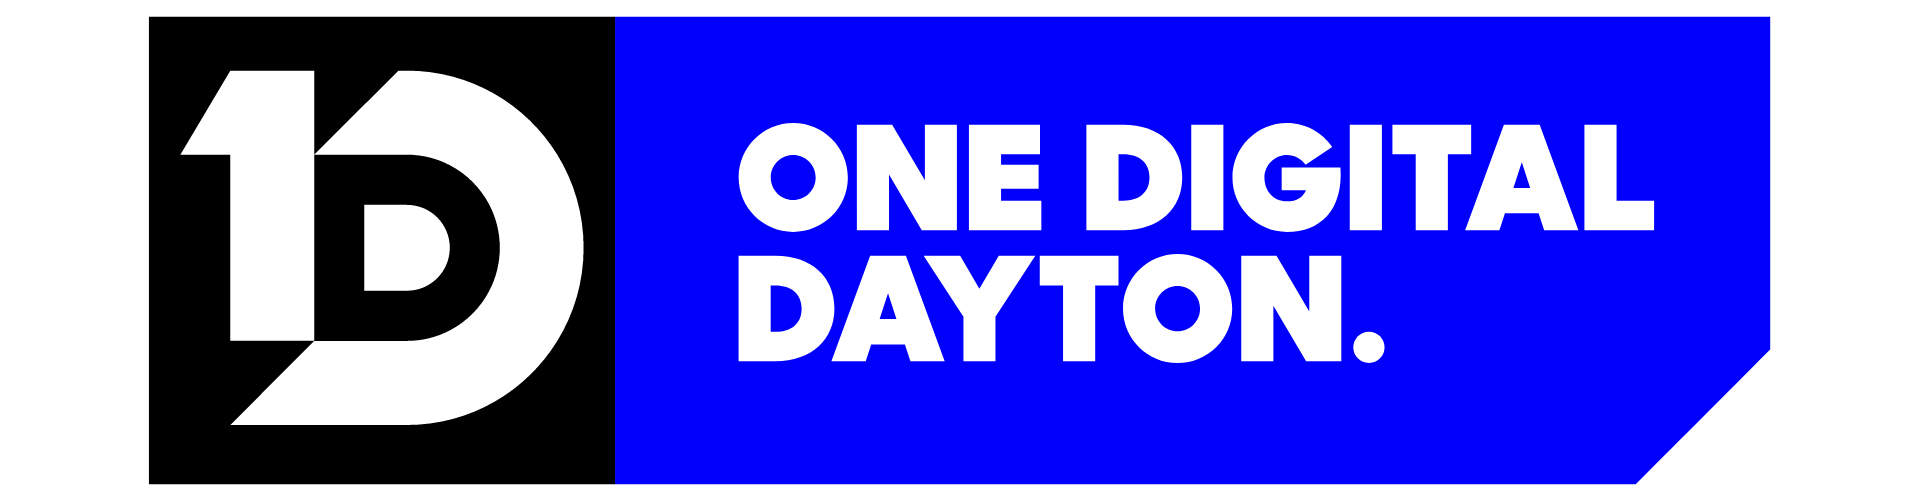 One Digital Dayton